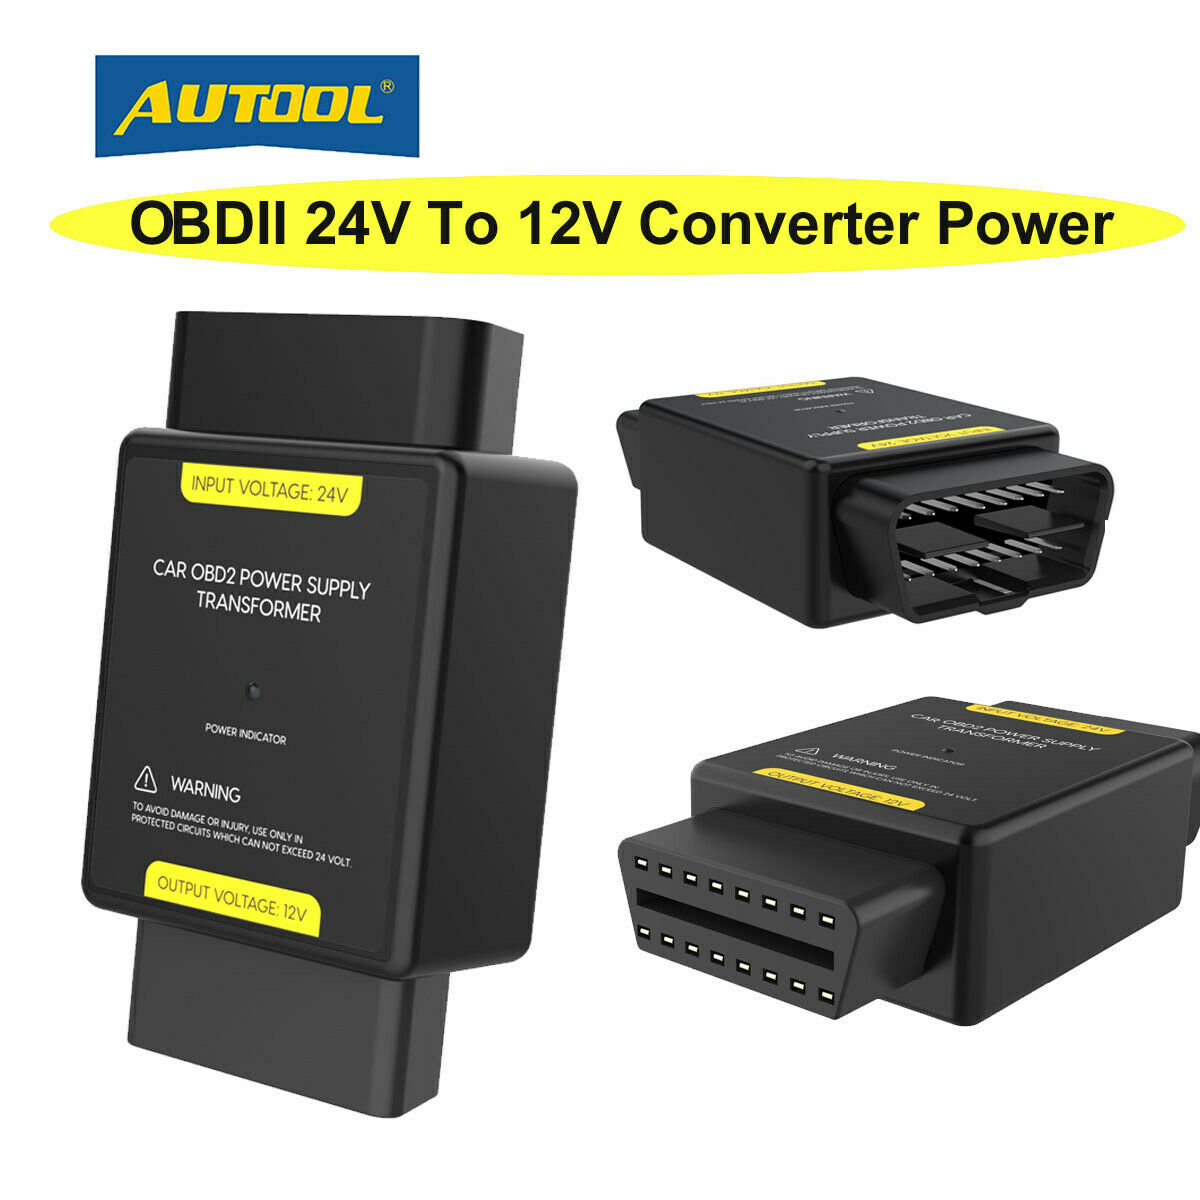 Obd2 24v To 12v Converter Adapter Obdii Power Supply Plug Car Truck Converter